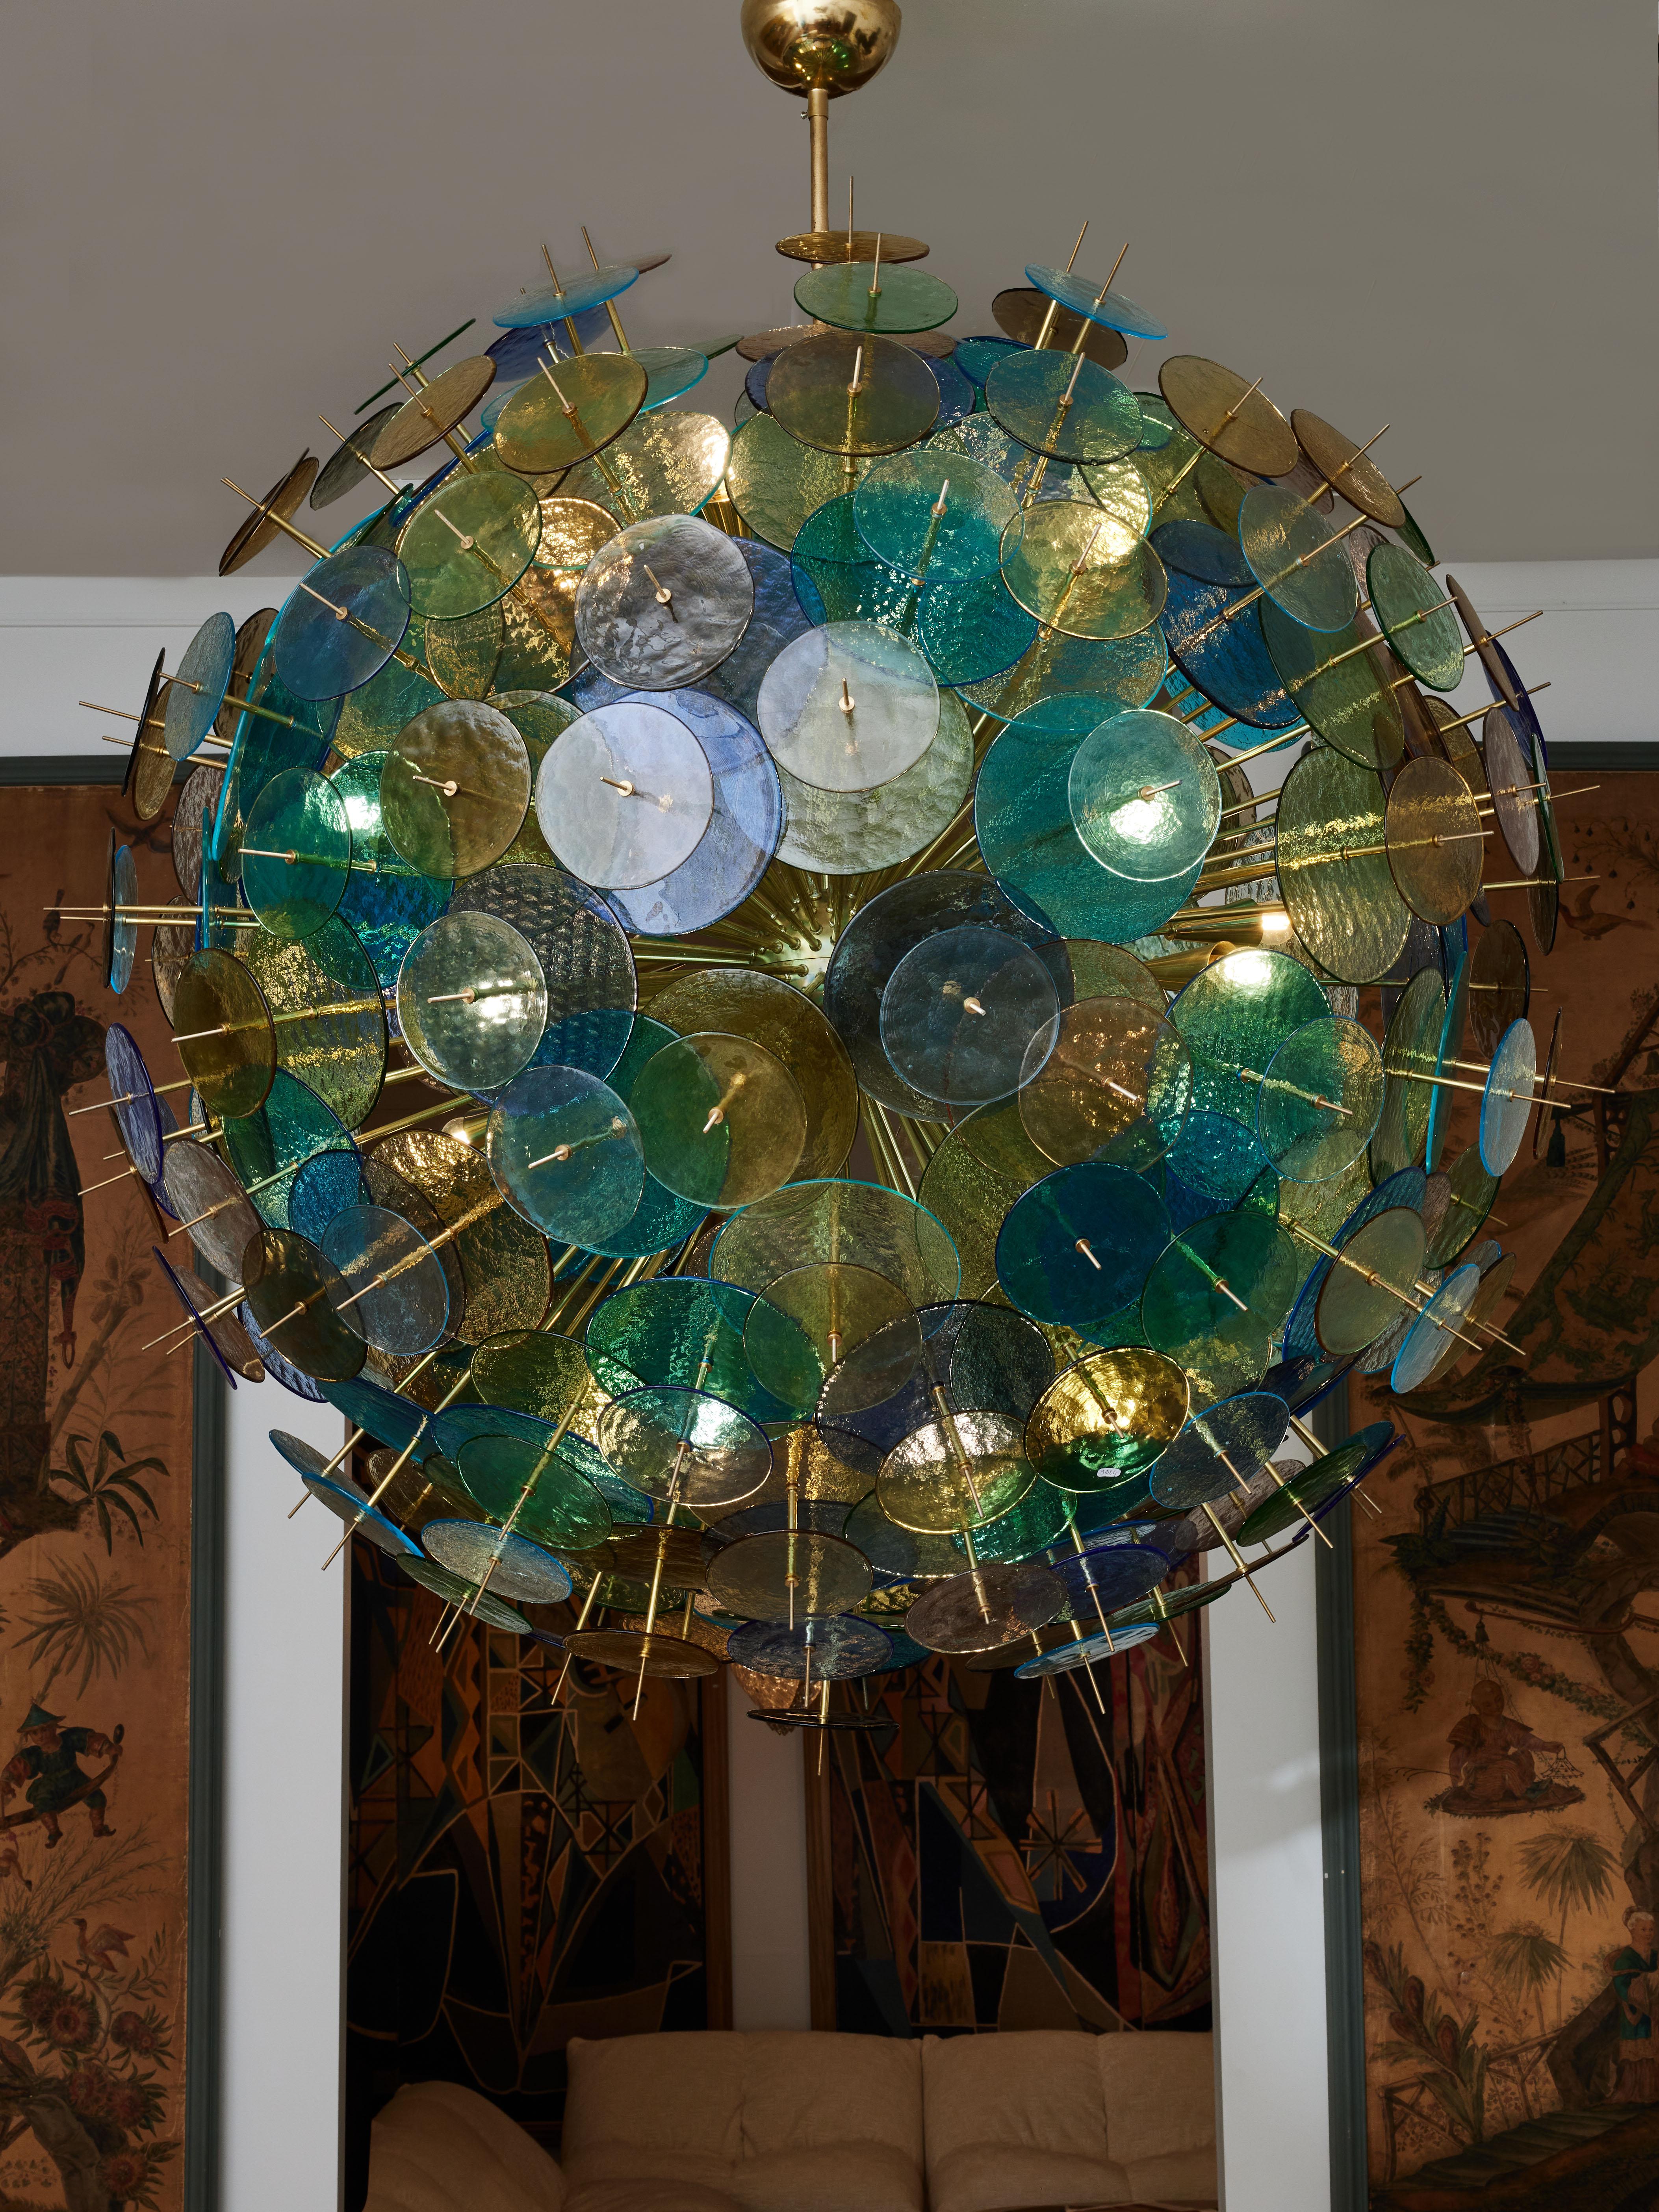 Sputnik chandelier in brass with tainted Murano glass plates.
Creation by Studio Glustin.